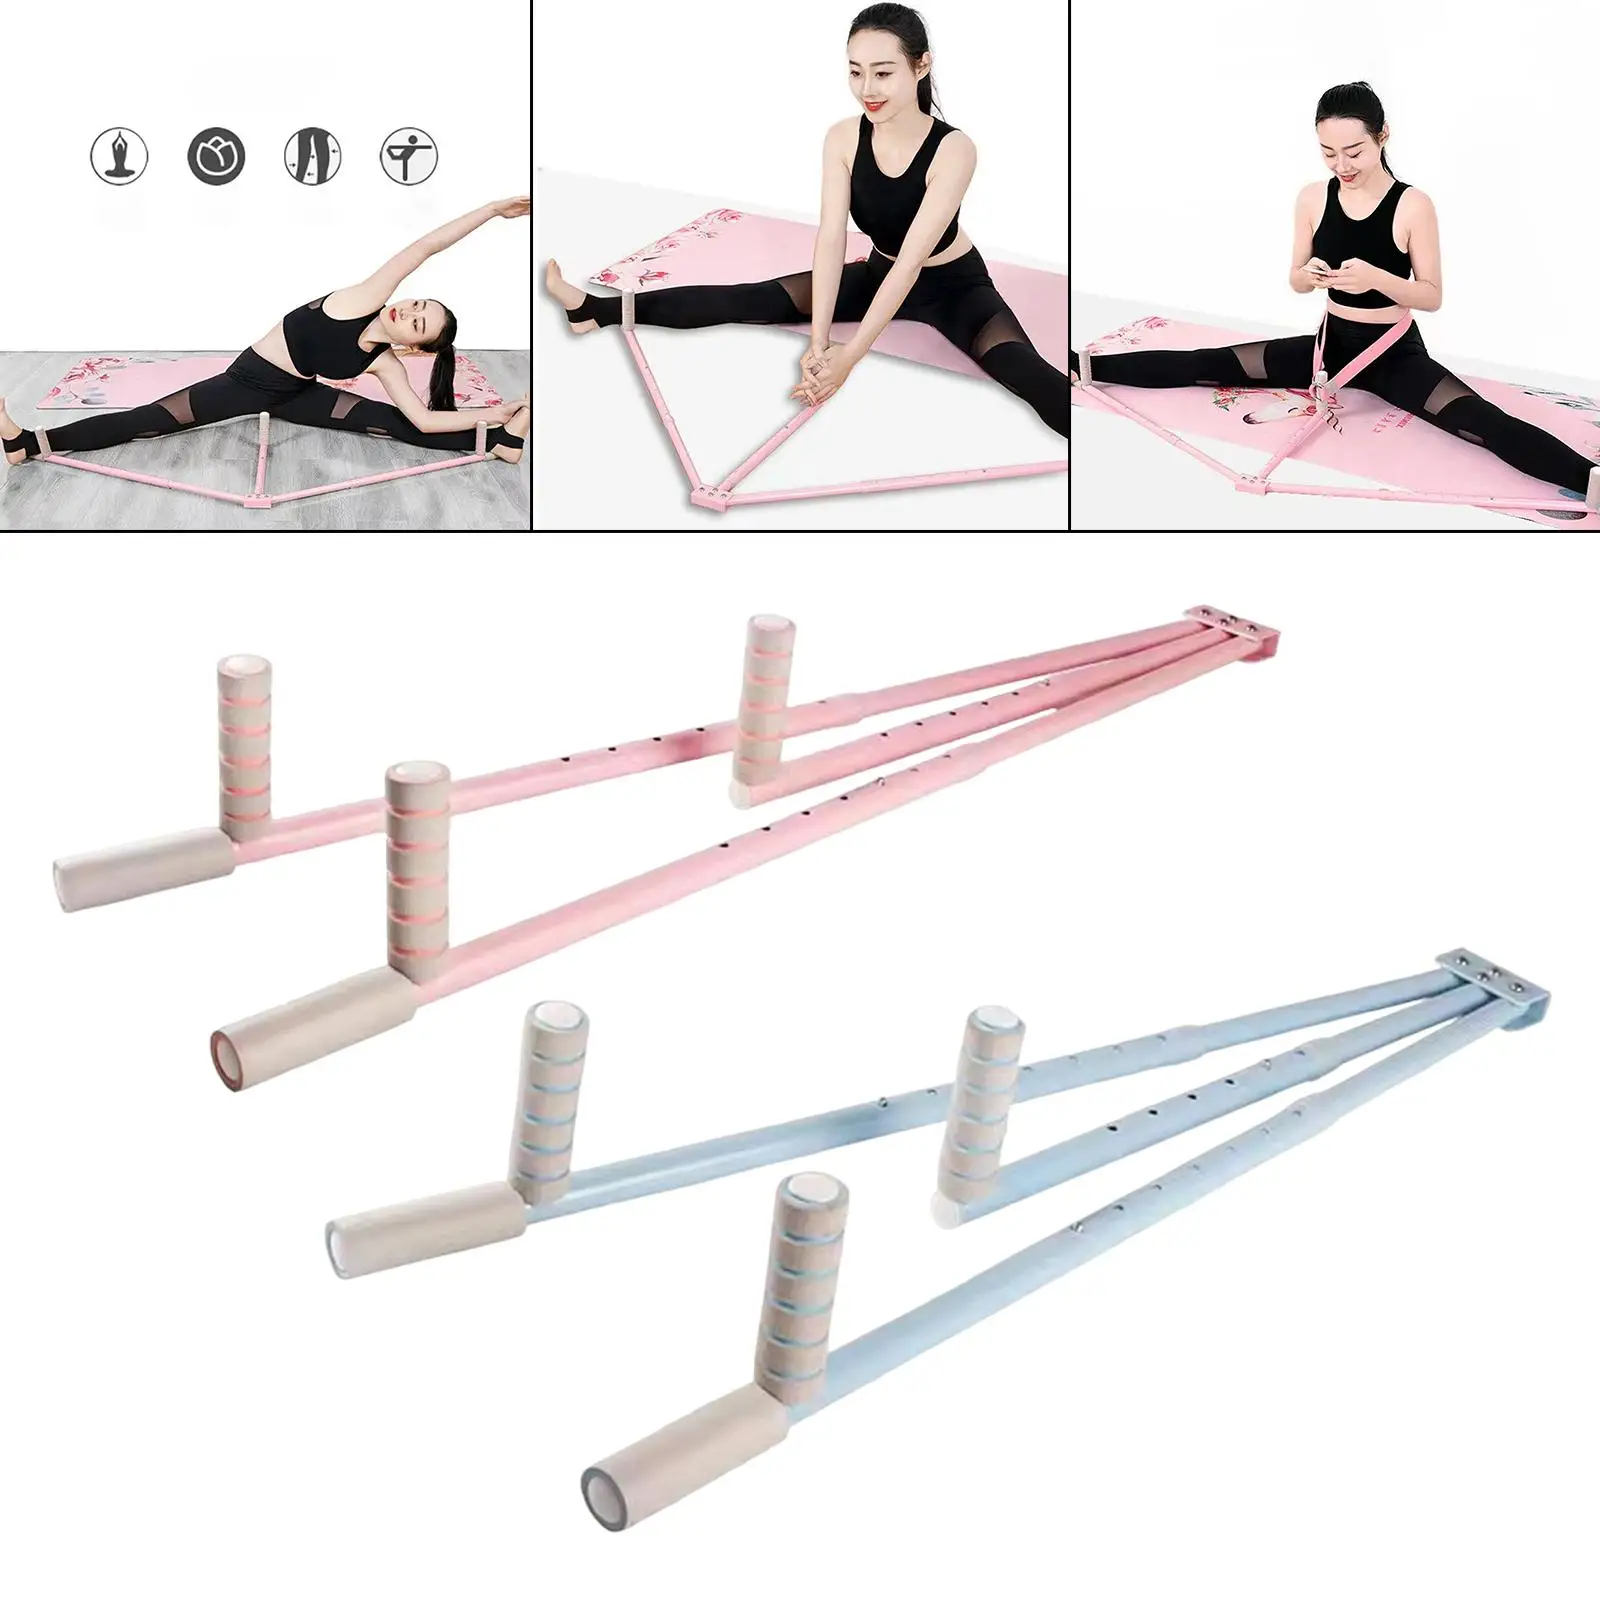 Leg Stretcher Adjustable Tension Split Machine Leg Extension Leg Extension Machine for Dance Ballet Gymnastics Training Sports